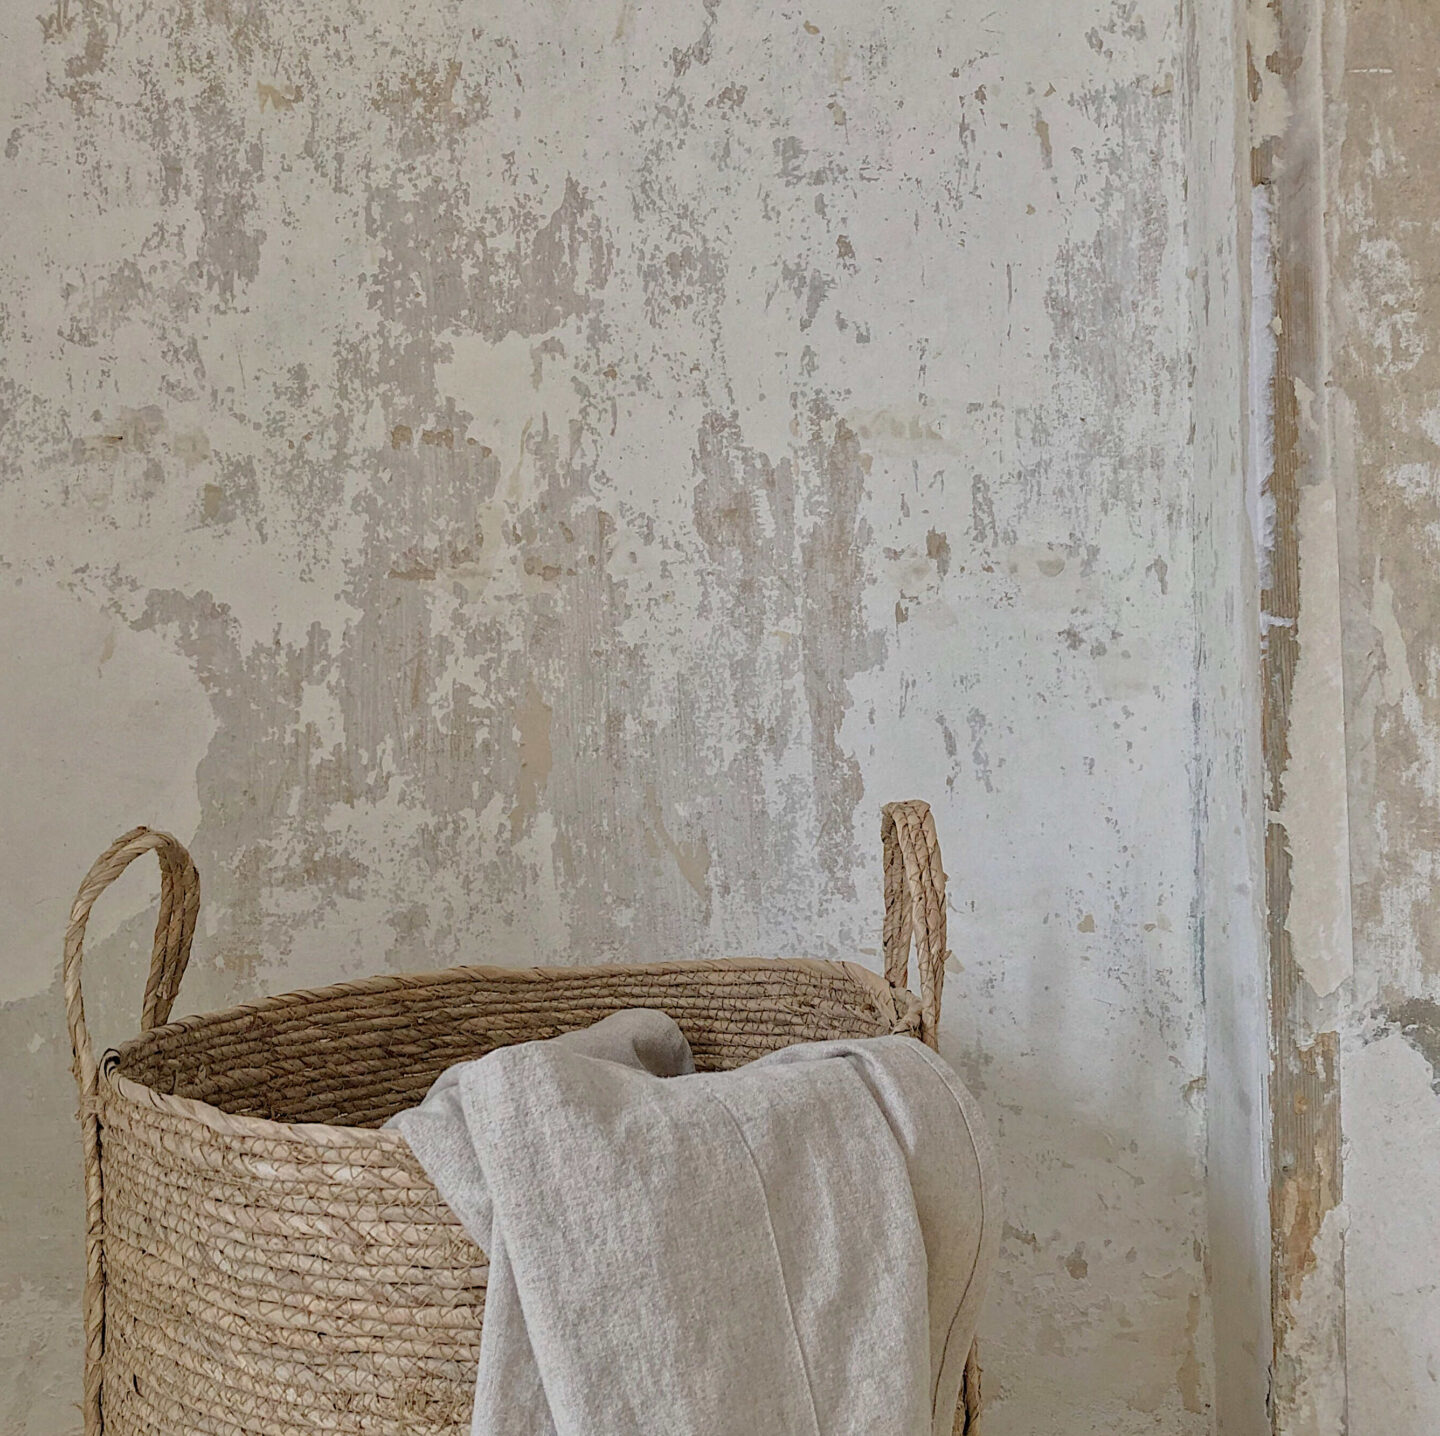 Basket against rustic wall